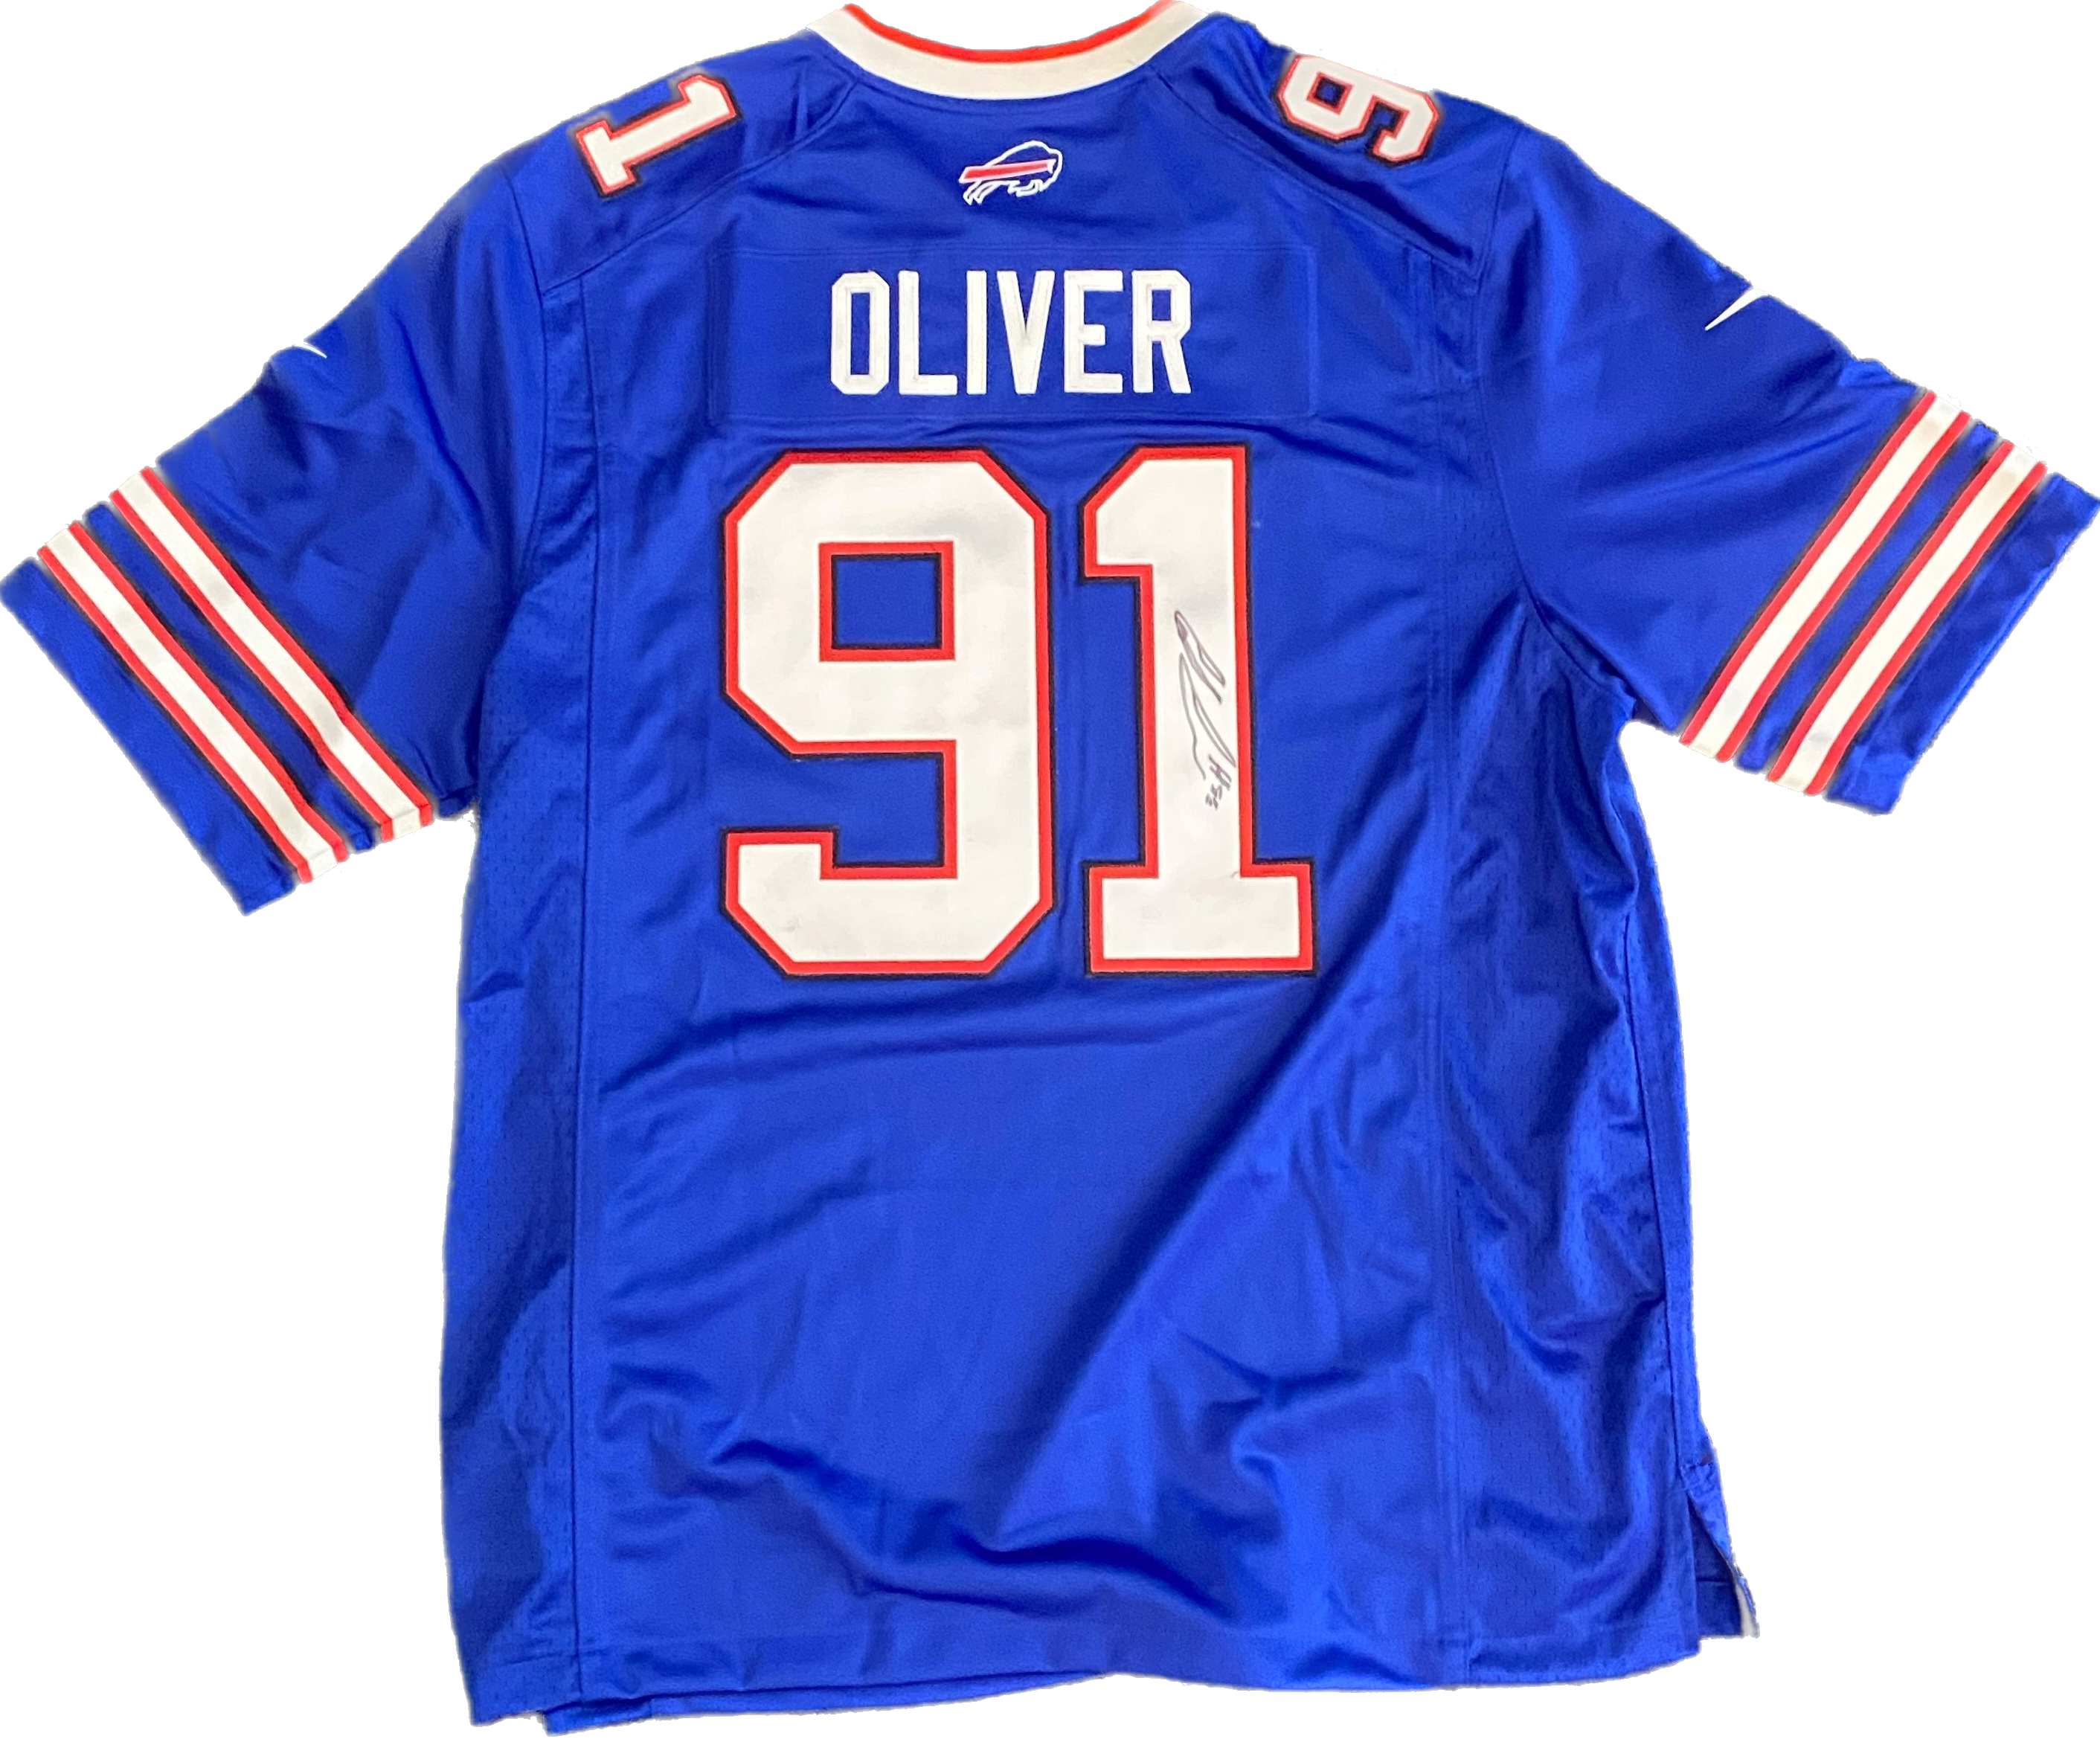 Ed Oliver jersey